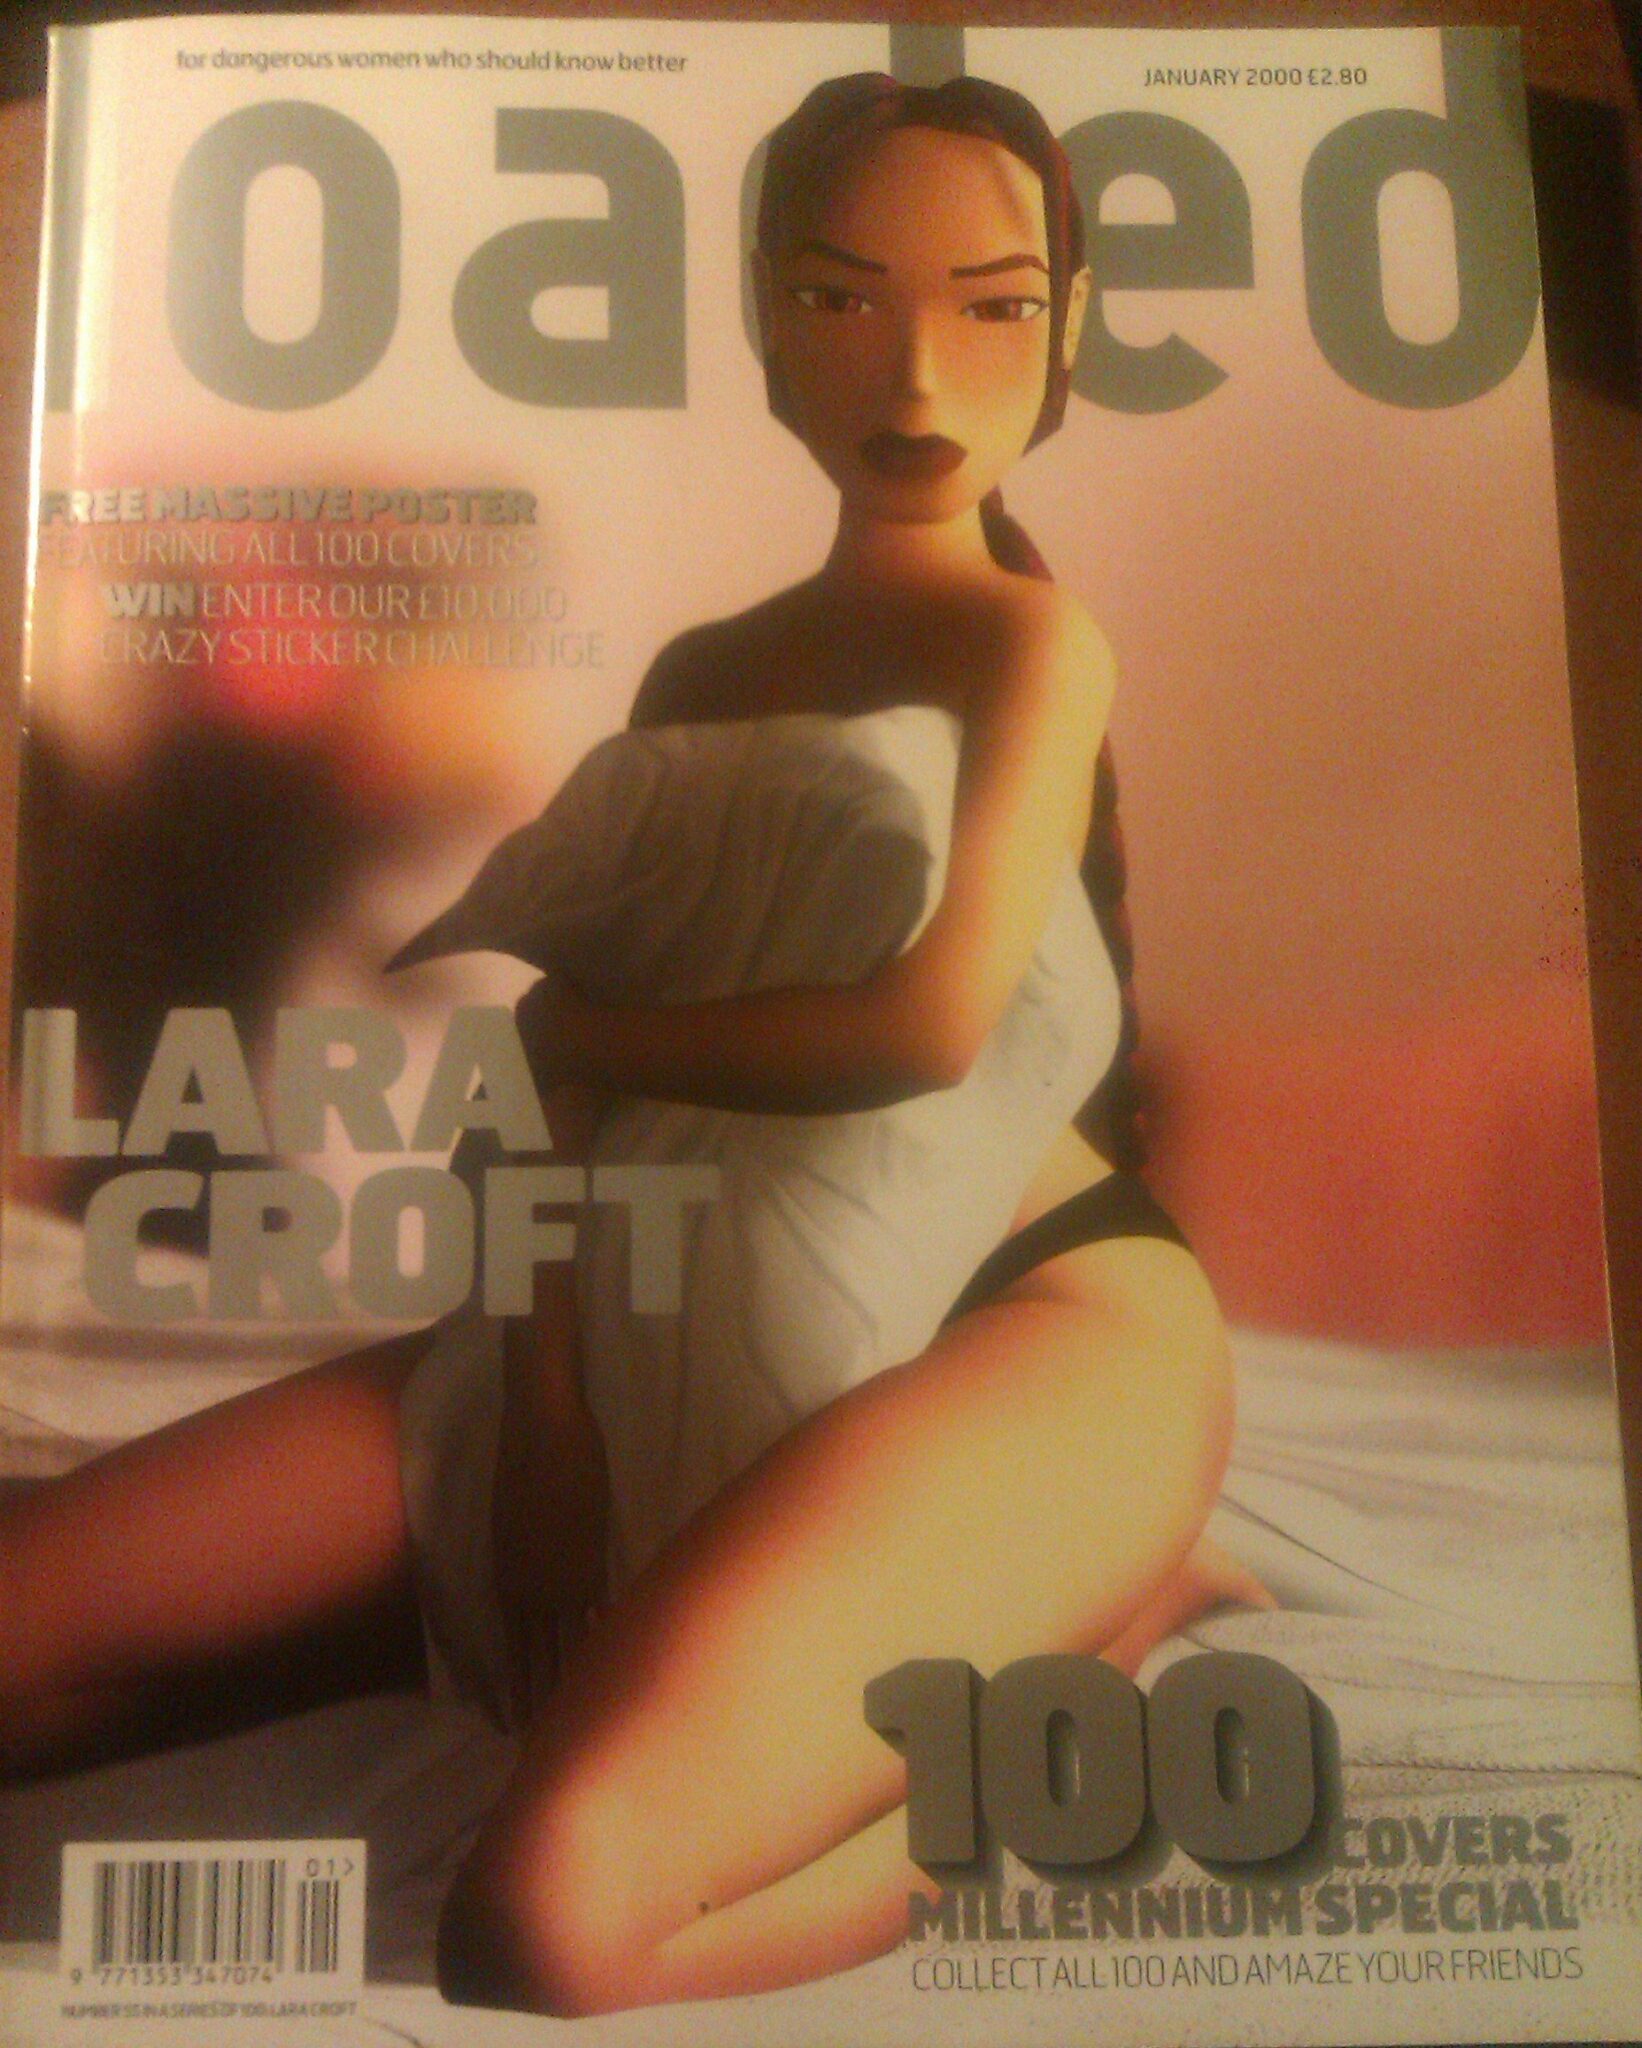 Lara Croft Loaded magazine